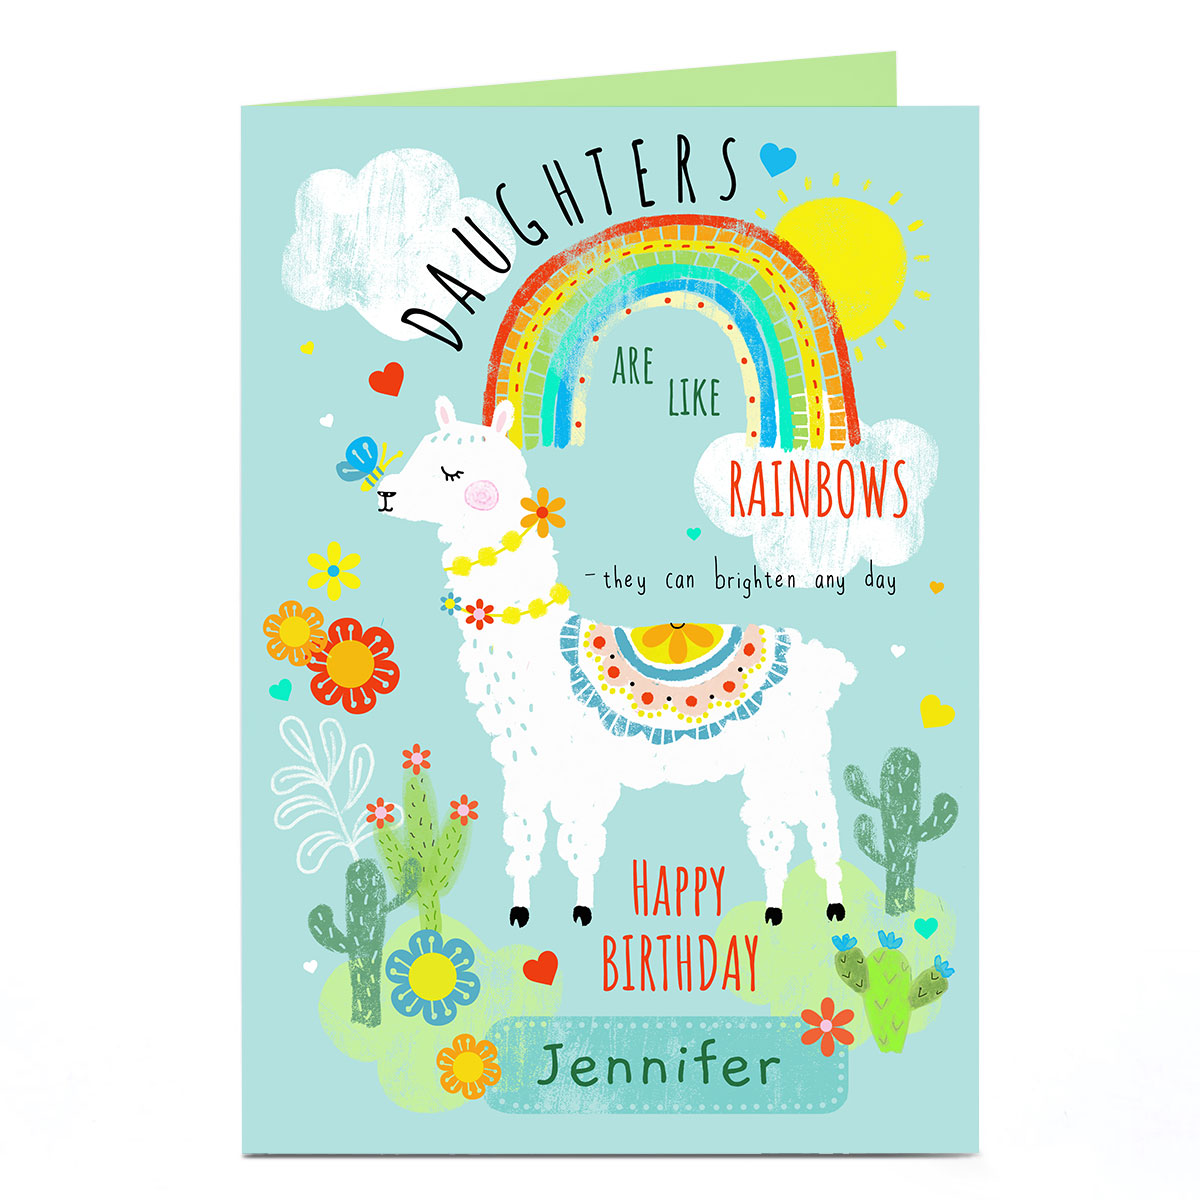 Personalised Birthday Card - Daughters Are Like Rainbows